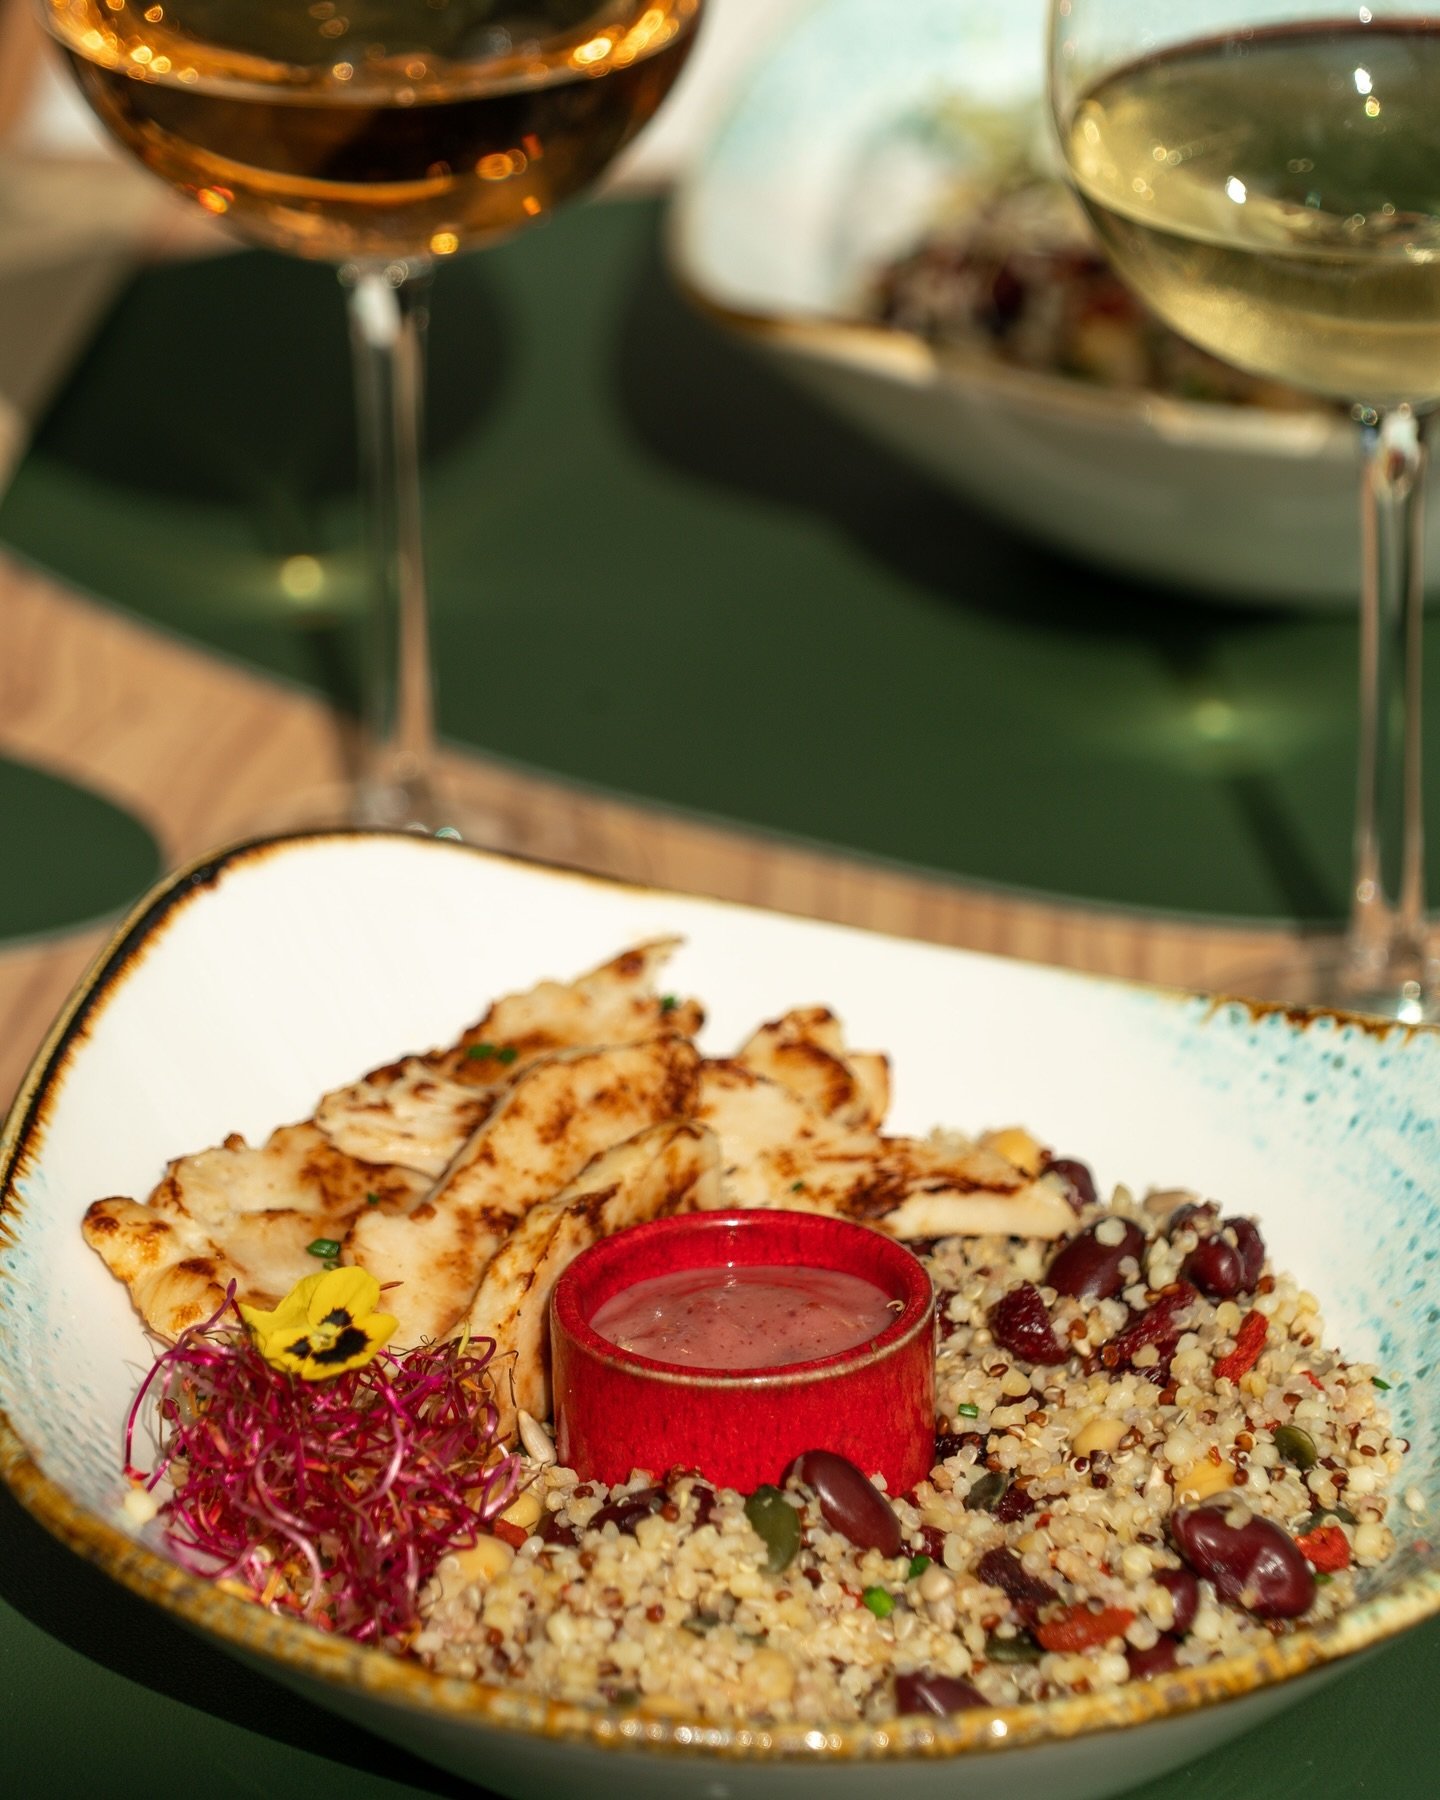 Le Blooma vous souhaite un bon app&eacute;tit 😋 

📸 @iamsolenne 

#blooma #bloomaoasisurbaine #restaurant #food #foodie #yummy #foodphotography #foodstagram #quinoa #midi #bonappetit #goodappetite #mercure #hotel #paris #valdefontenay